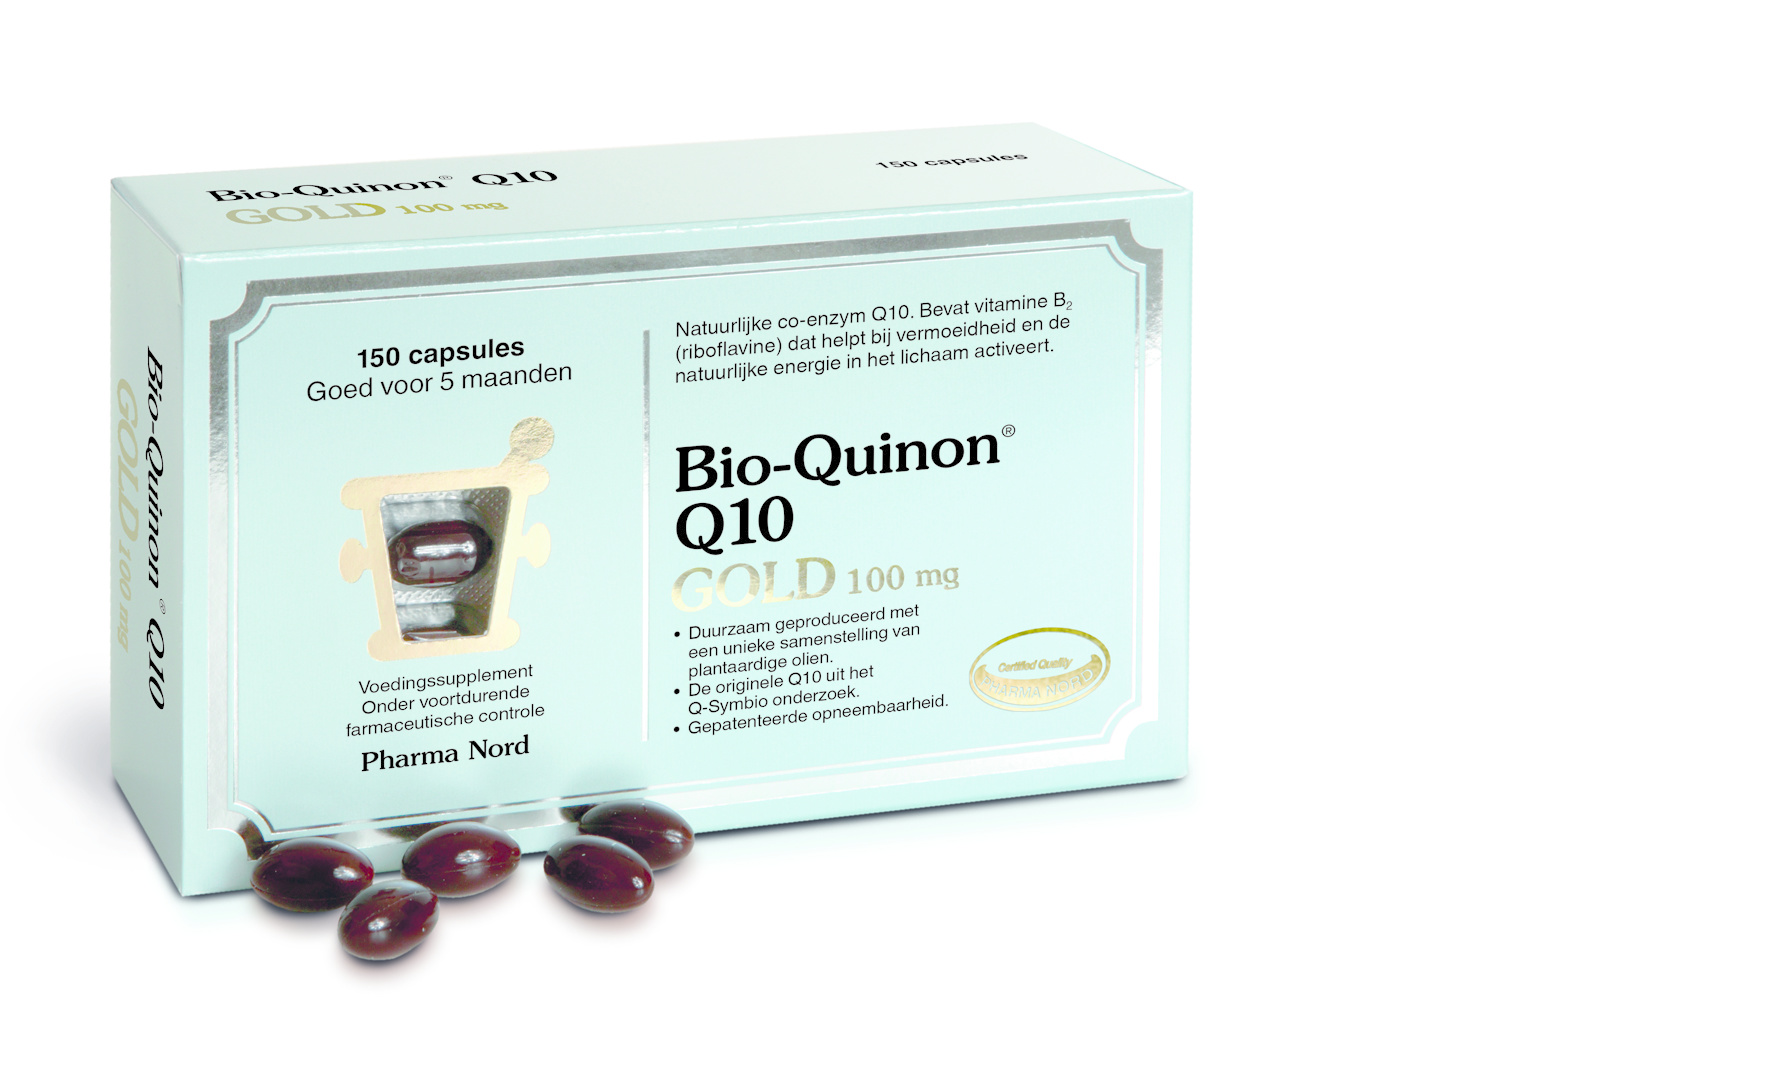 Pharma Nord Pharma Nord Bio quinon Q10 gold 100 mg (150 caps)